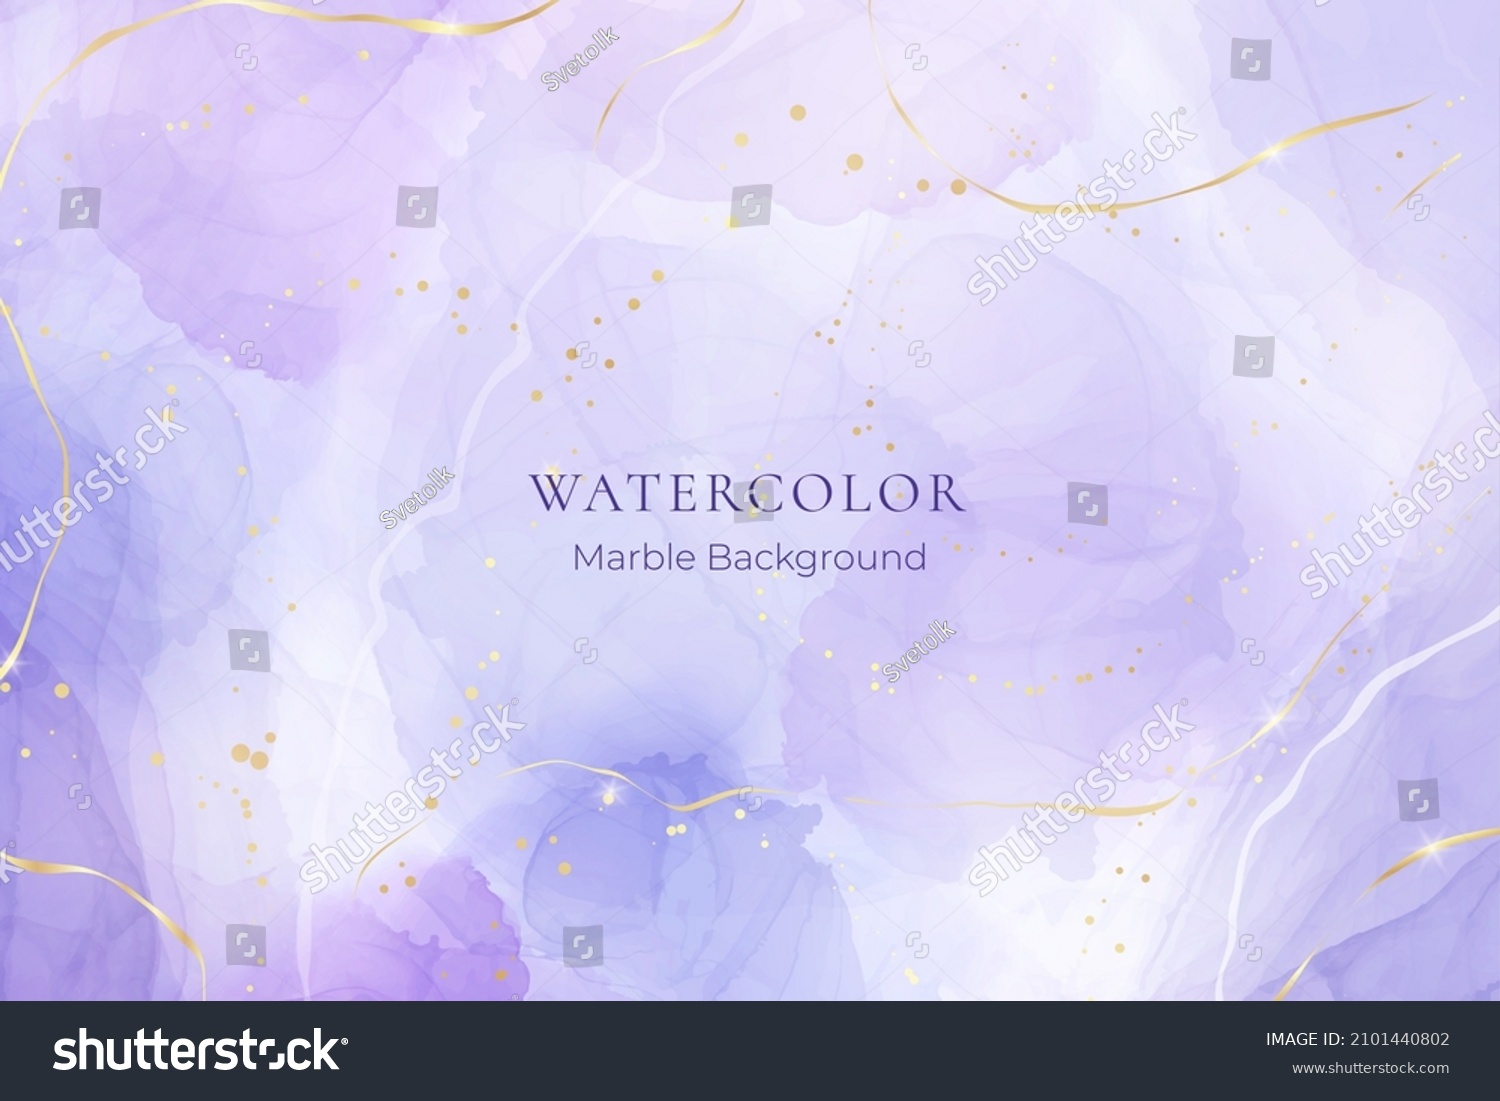 SVG of Violet lavender liquid watercolor marble background with golden lines. Pastel purple periwinkle alcohol ink drawing effect. Vector illustration design template for wedding invitation, menu, rsvp. svg